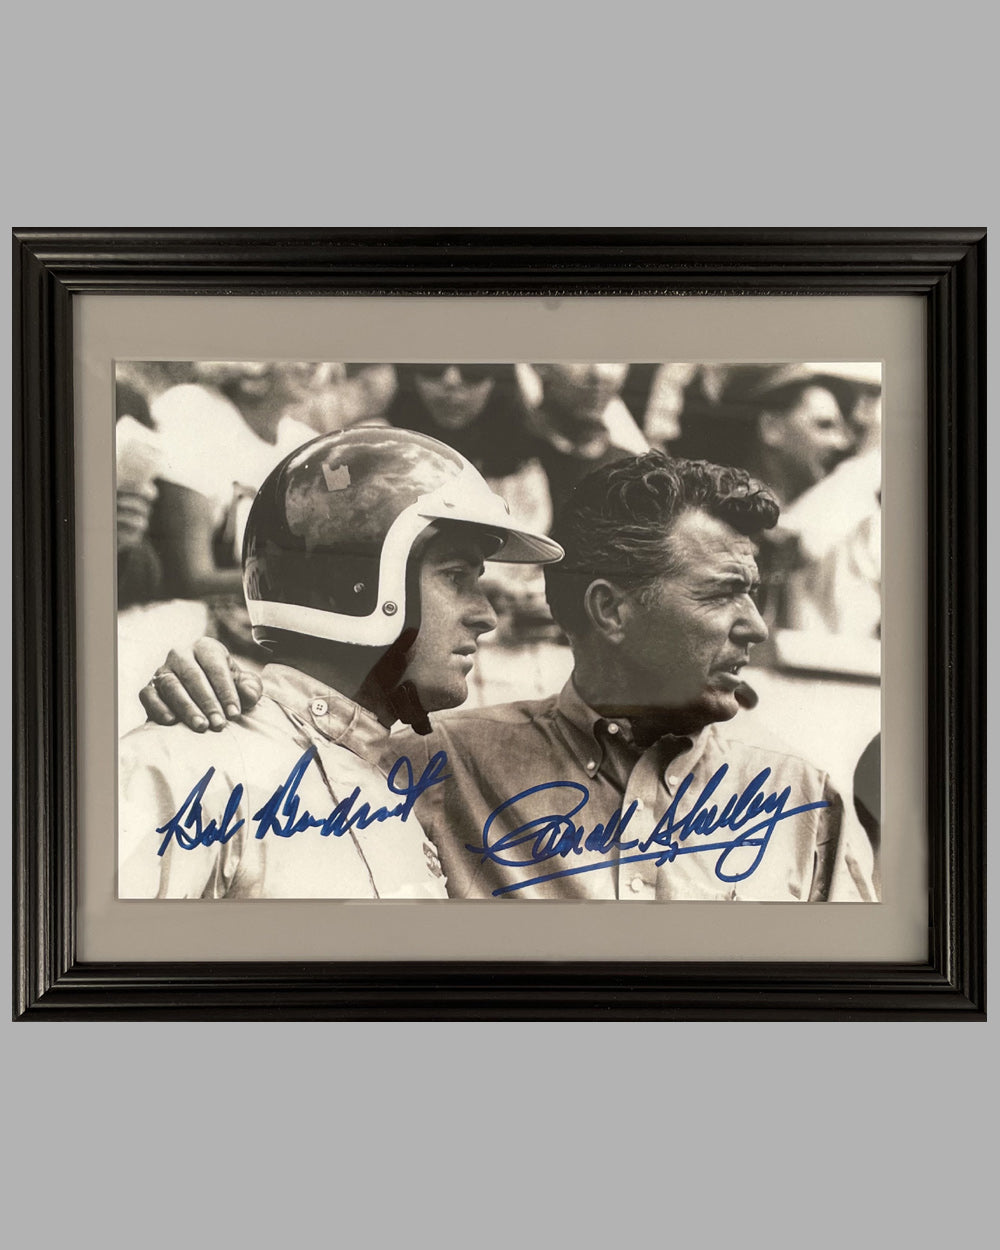 Bob Bondurant and Carroll Shelby b&w photograph with facsimile signatures